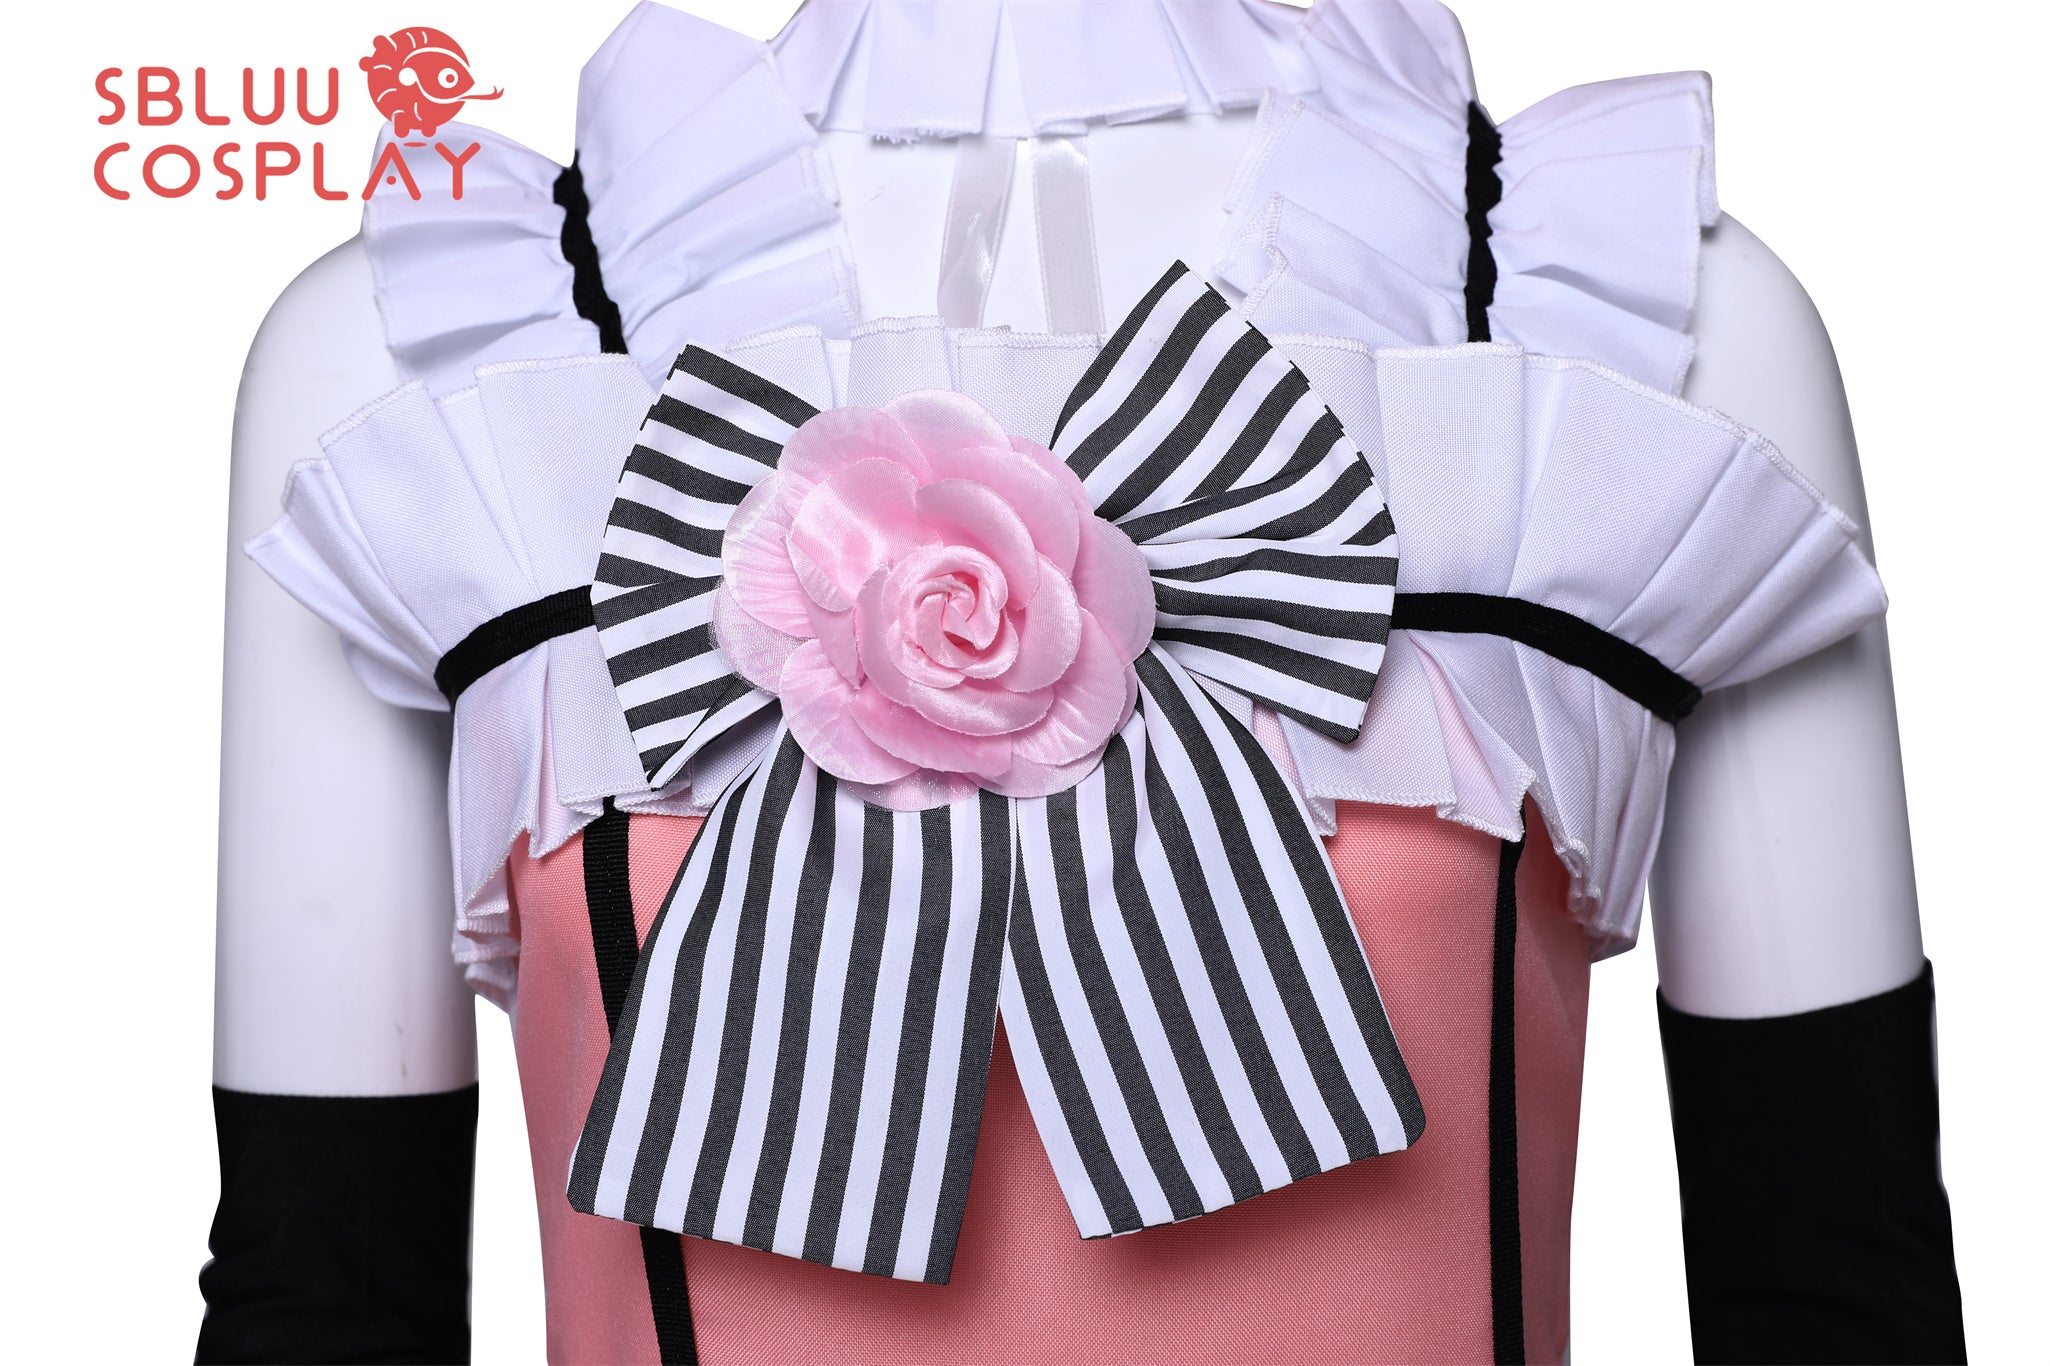 SBluuCosplay Black Butler Ciel Phantomhive Cosplay Costume Pink Dress